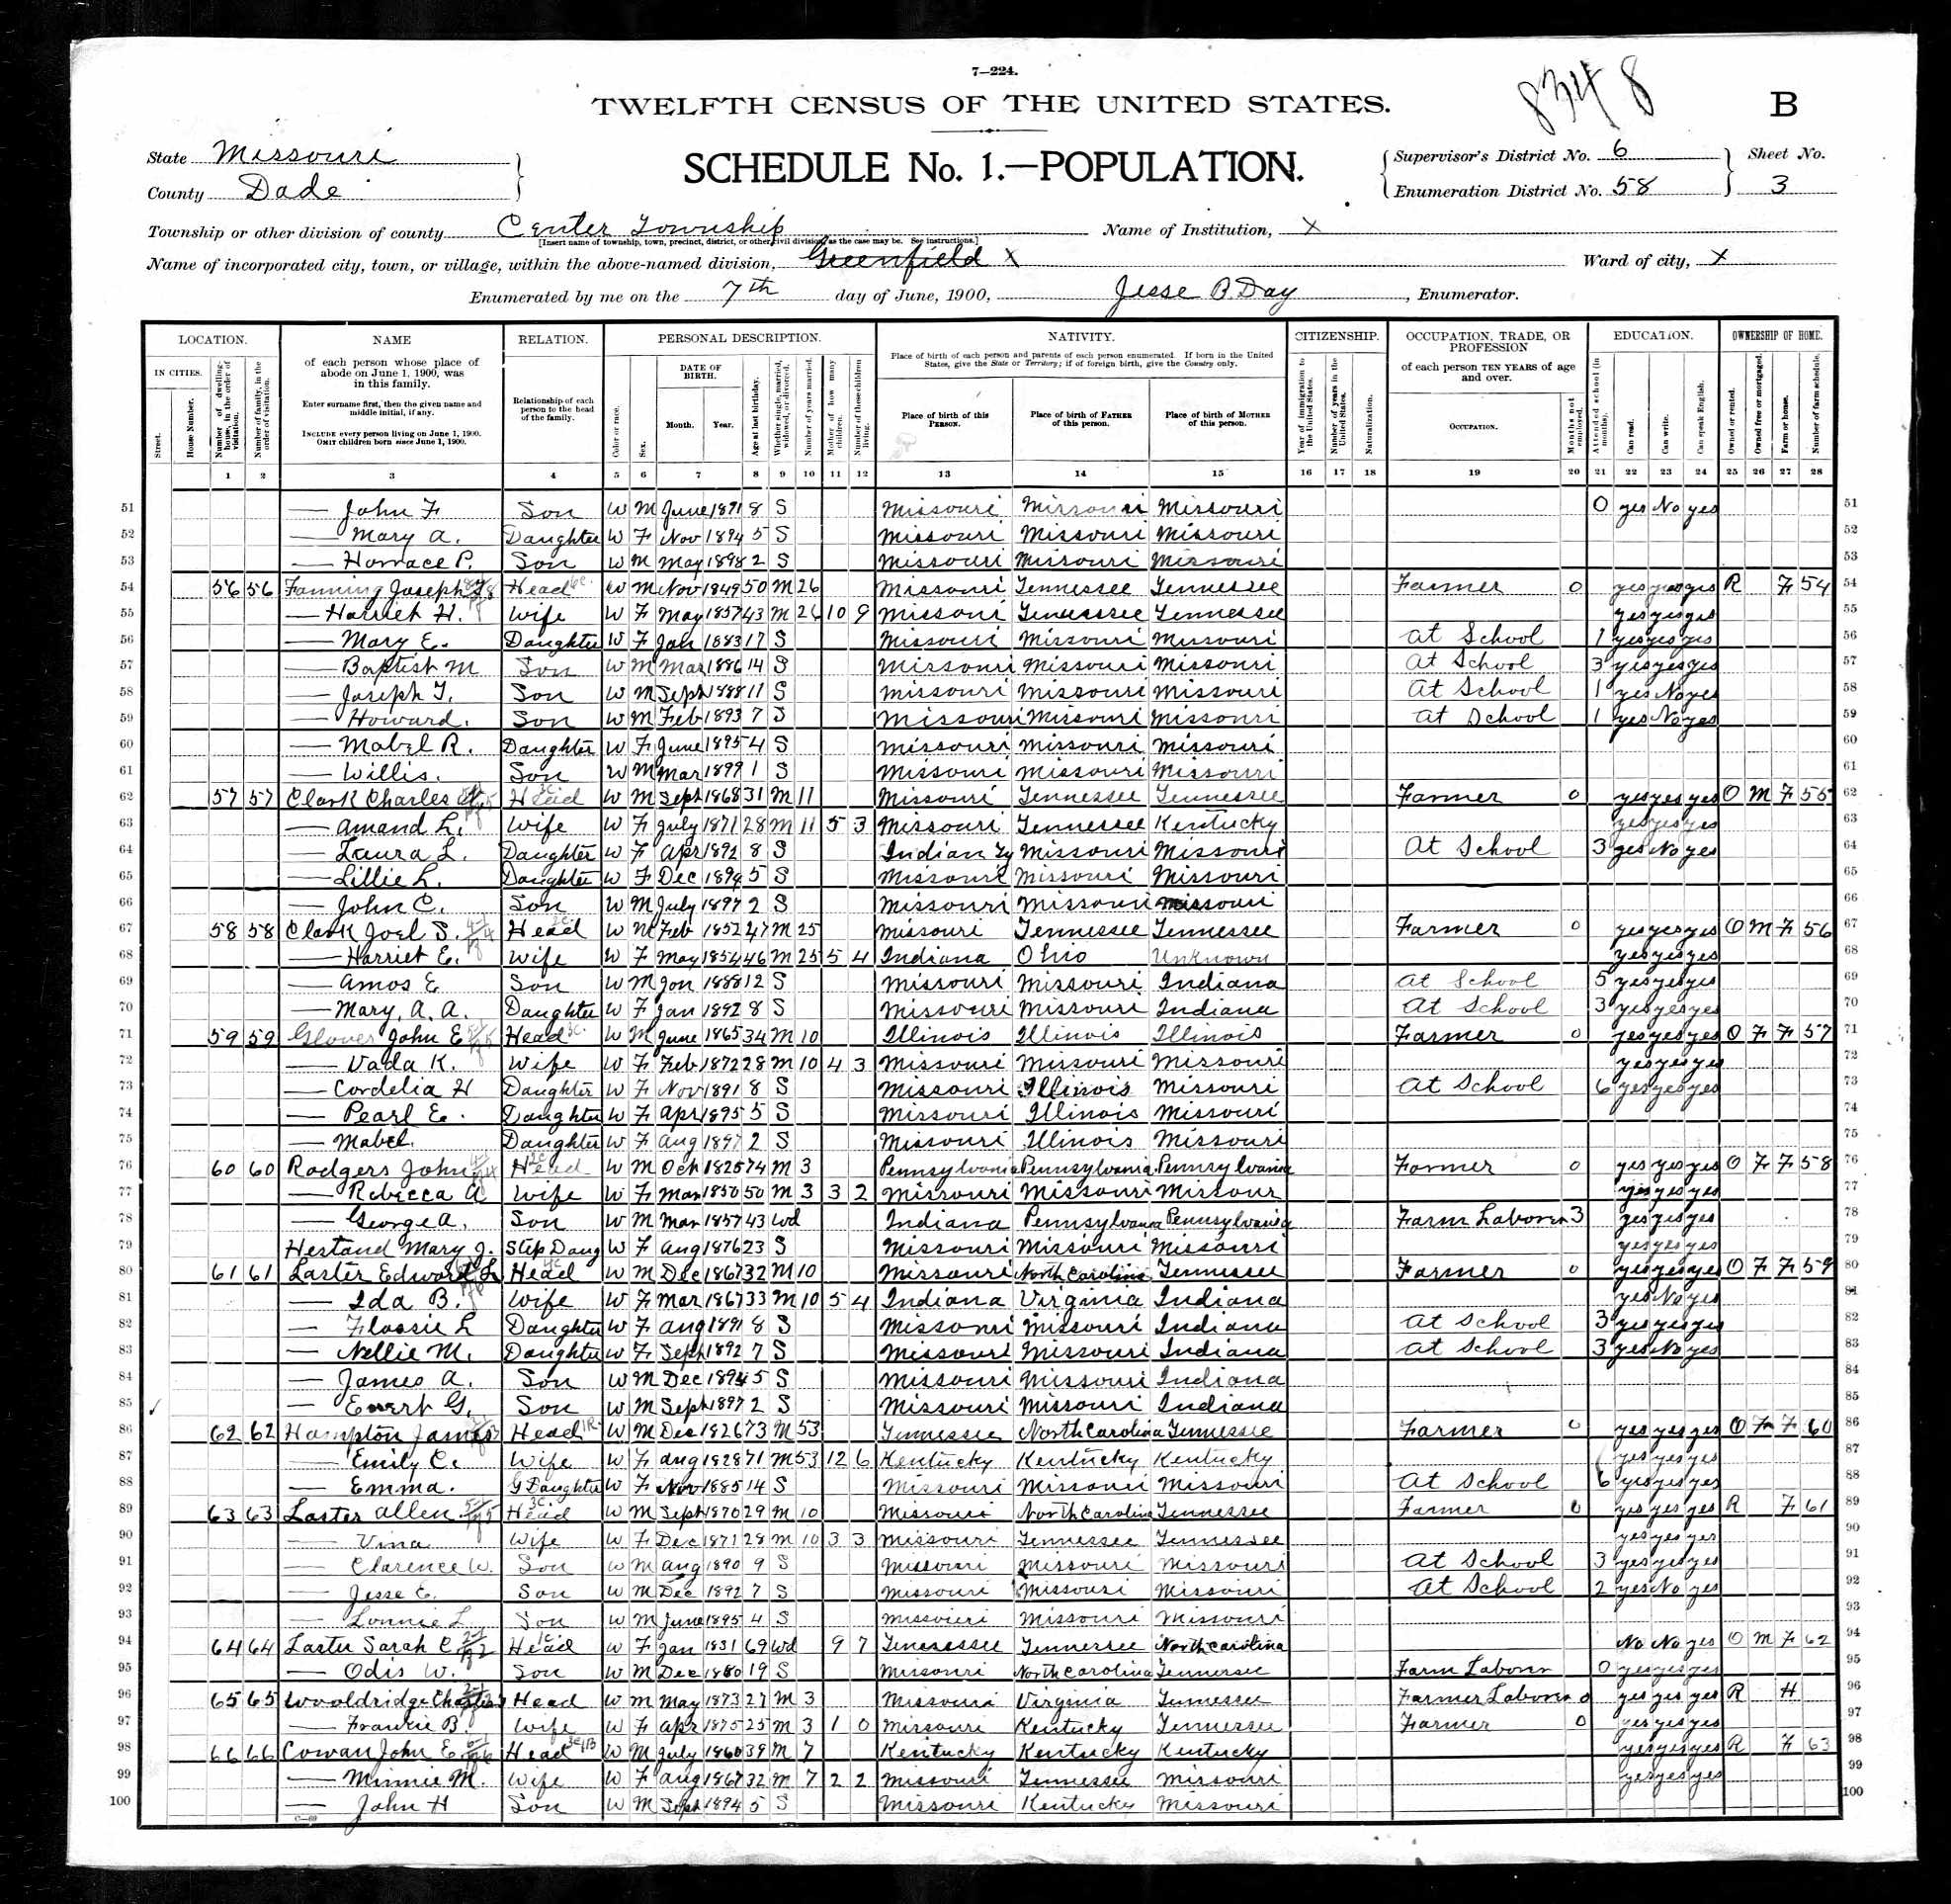 Edward L. and Ida (Palmer) Lasater, 1900 Dade County, Missouri, census